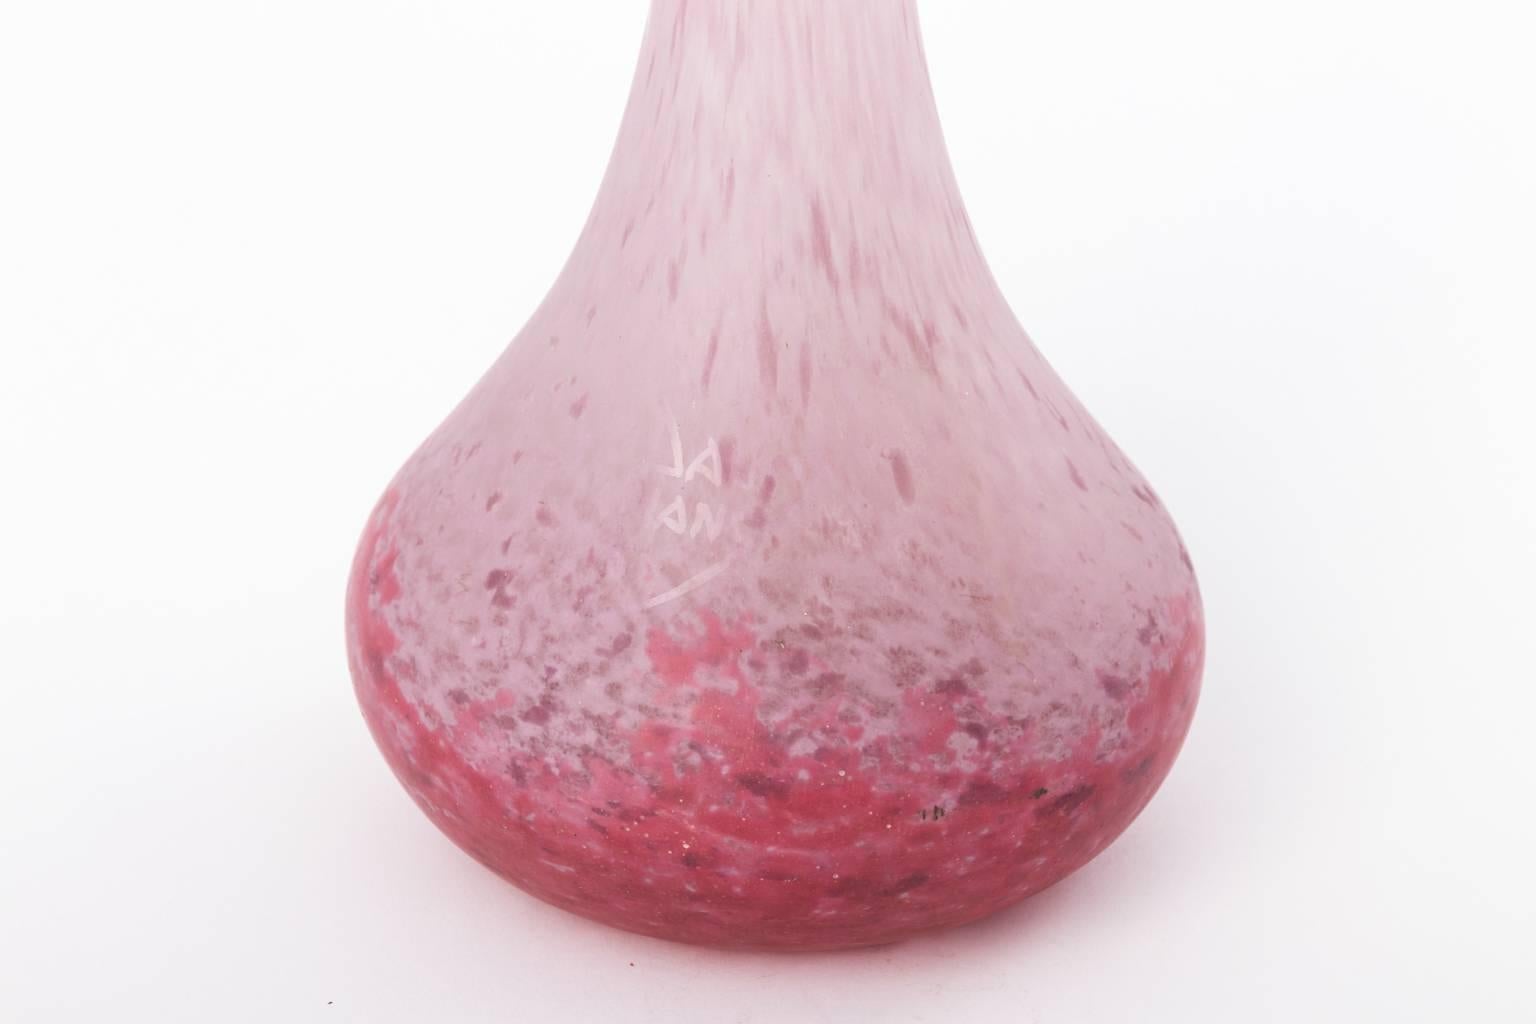 Daum Nancy France art glass stick vase, circa 1920 handblown with mottled colors, circa early 20th century.
   